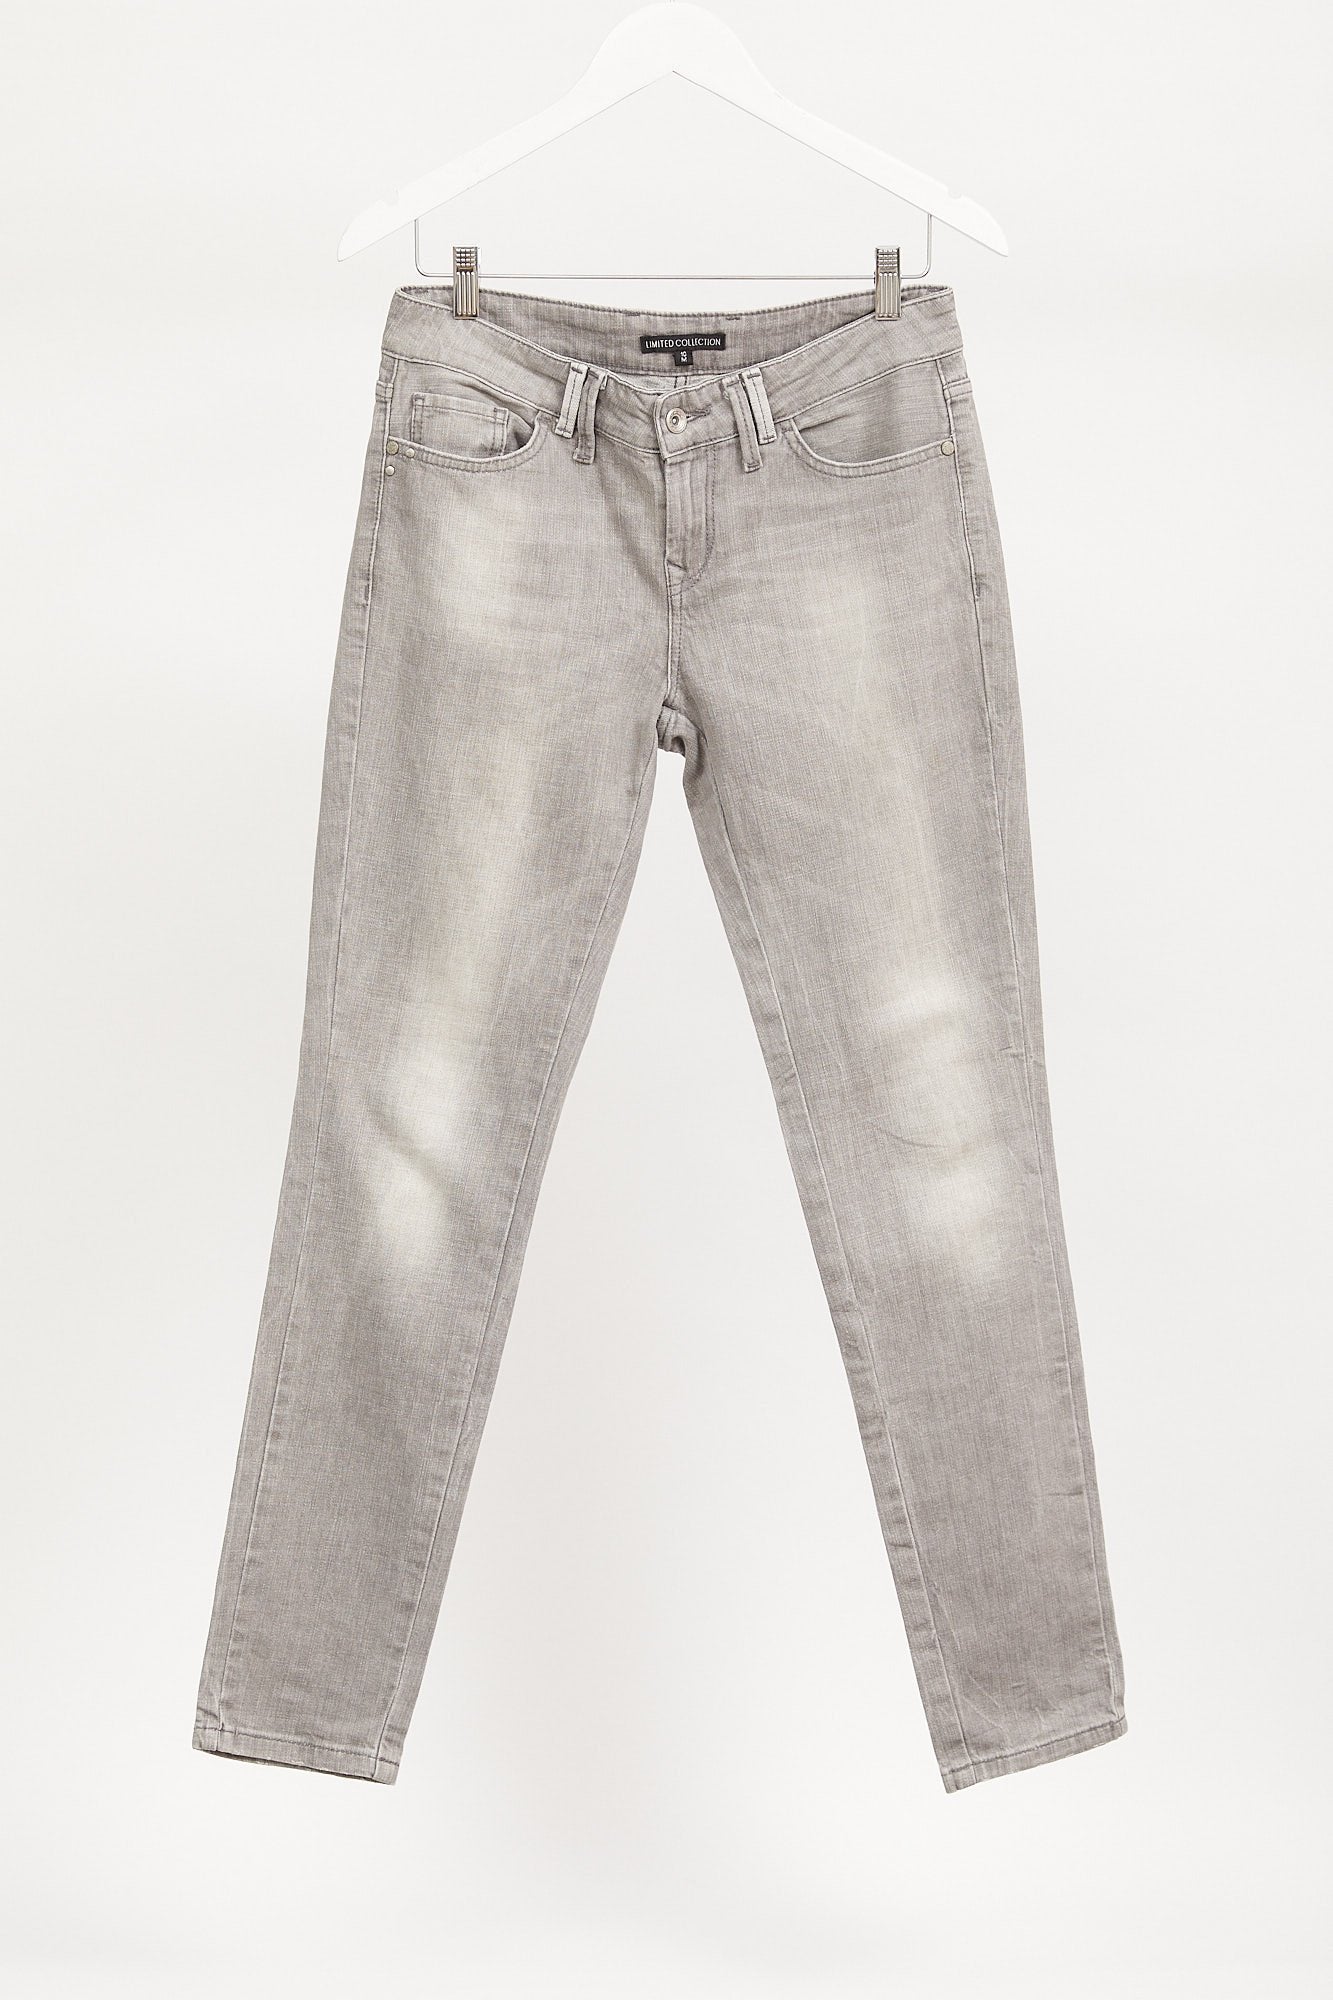 Womens M&S Grey slim Jeans: Size small/medium